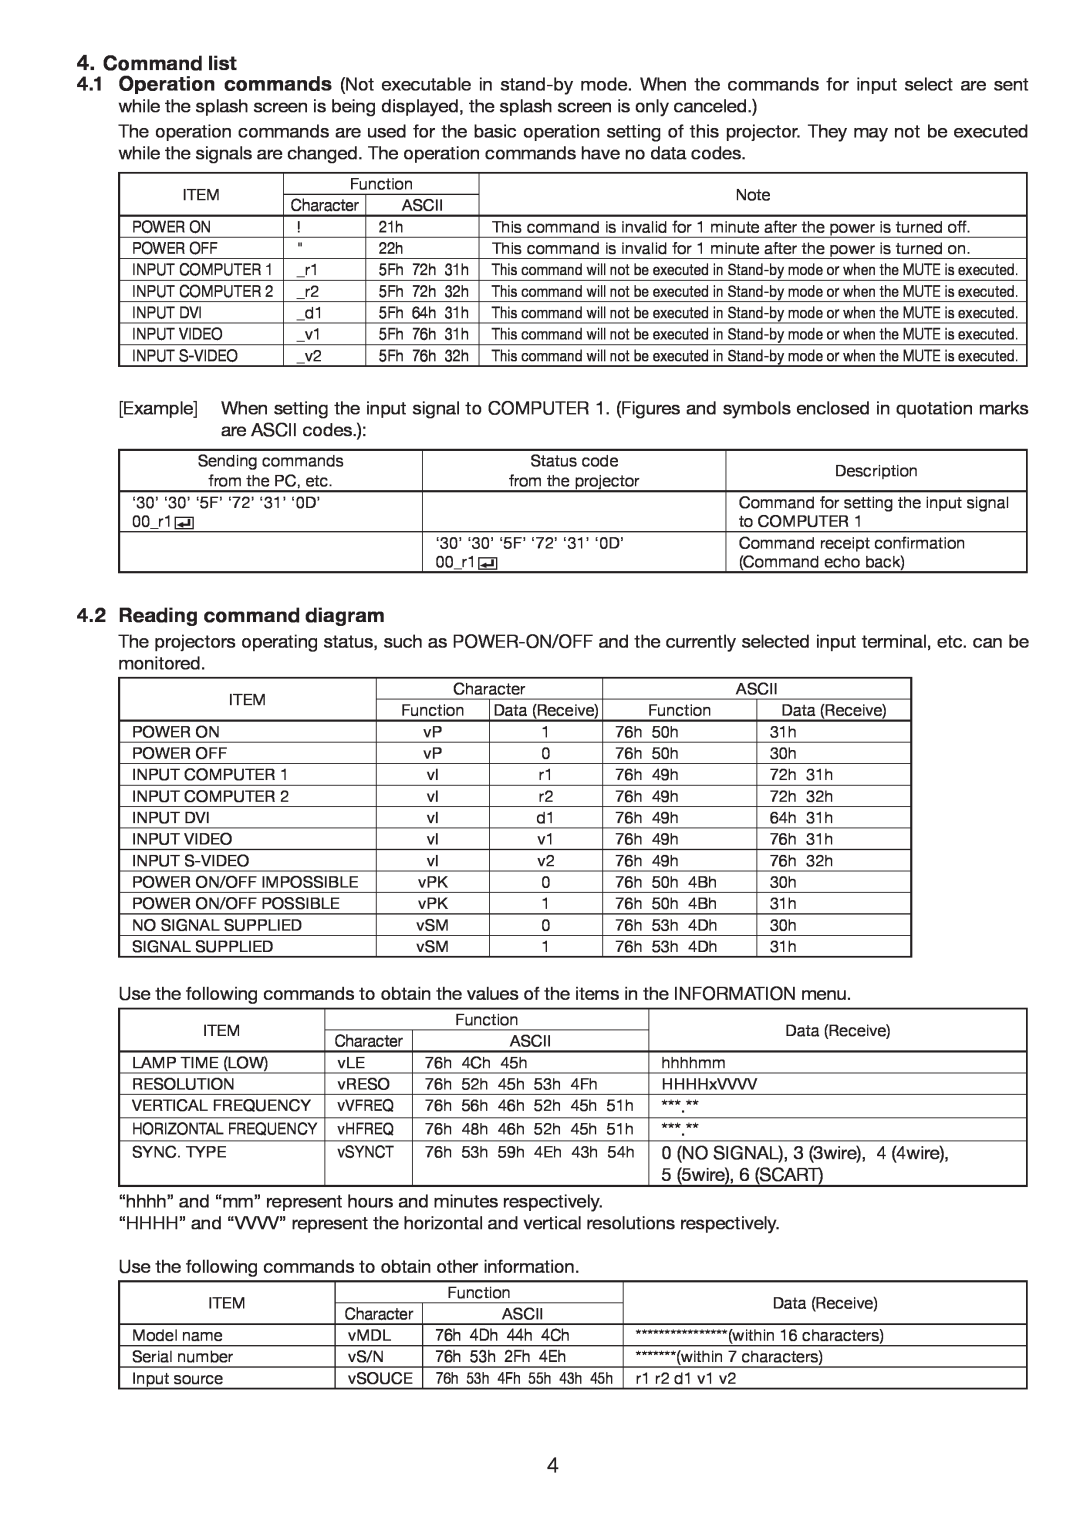 Mitsubishi Electronics FL7000LU manual Command list, Reading command diagram 